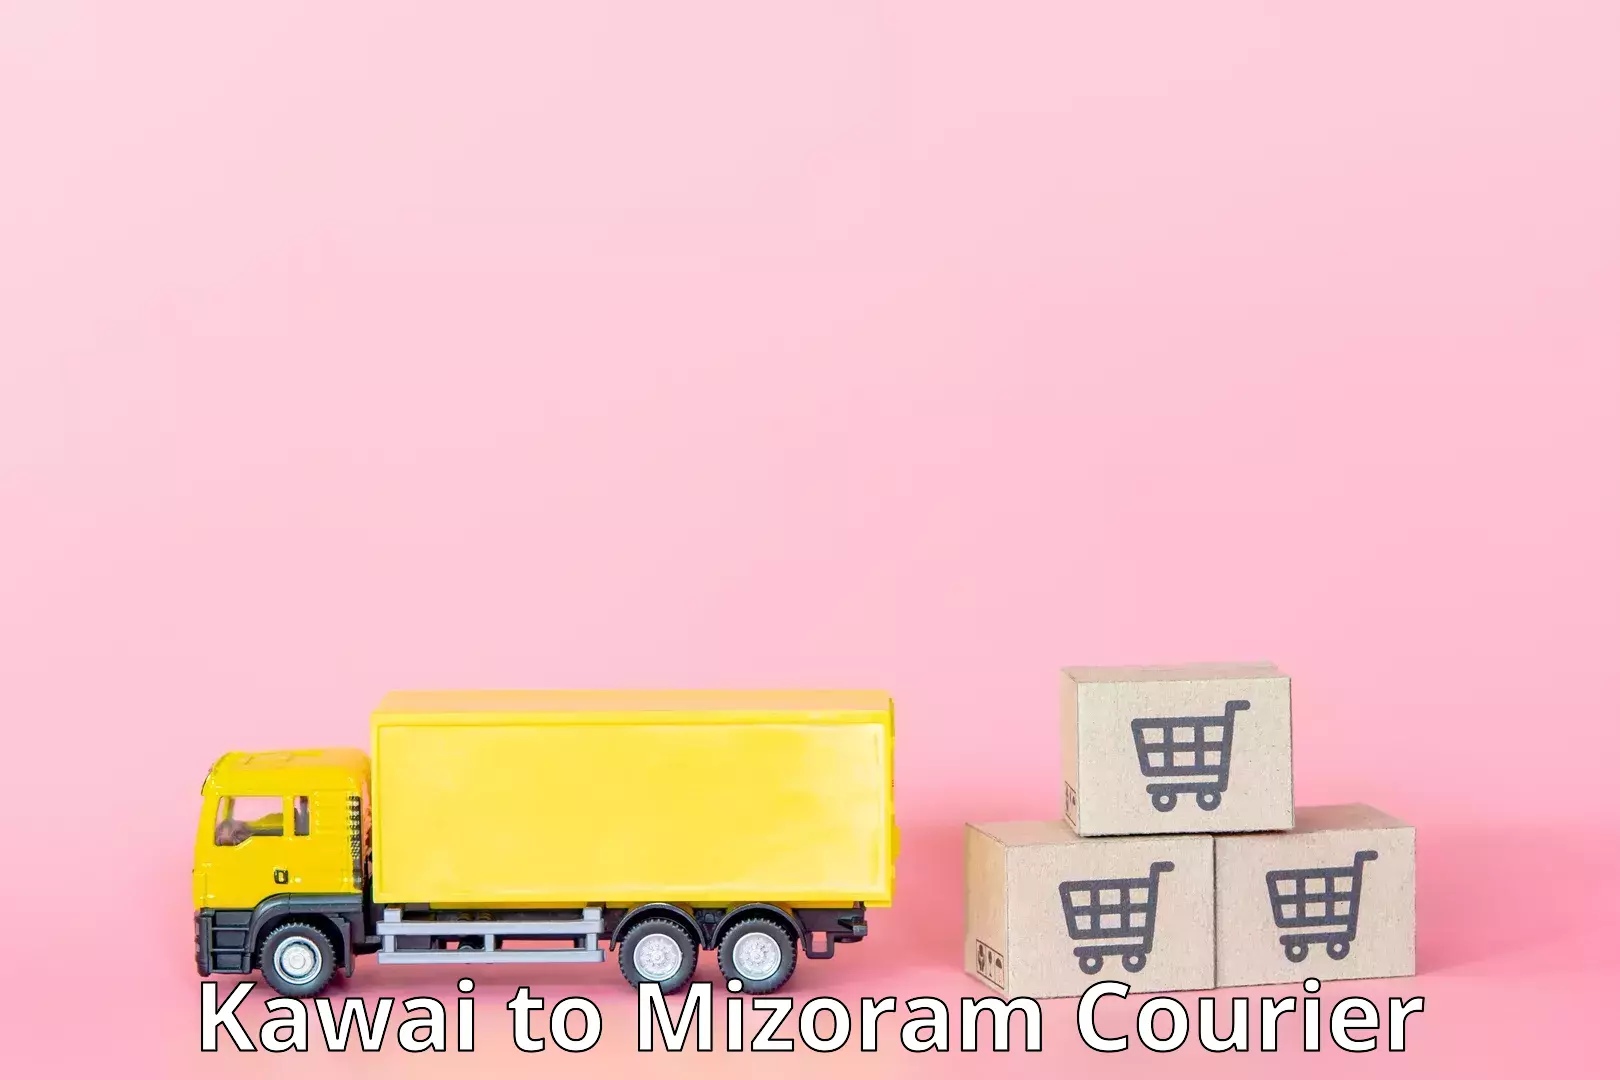 Urban courier service Kawai to Mizoram